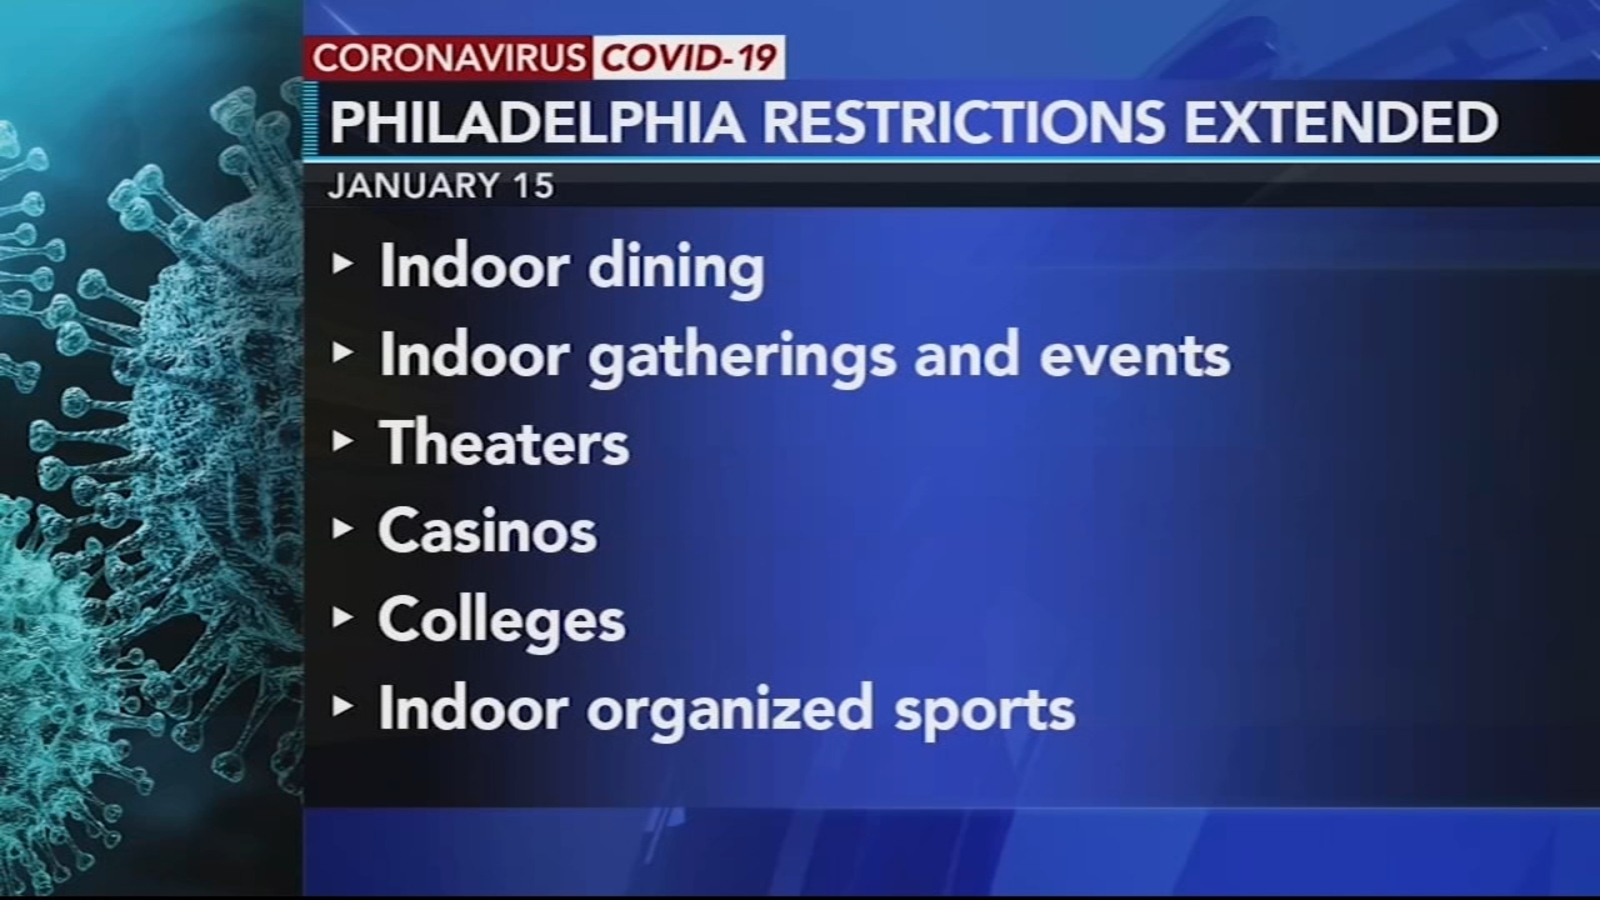 Philadelphia Govt-19 restrictions: Philadelphia extends some corona virus controls until January 15